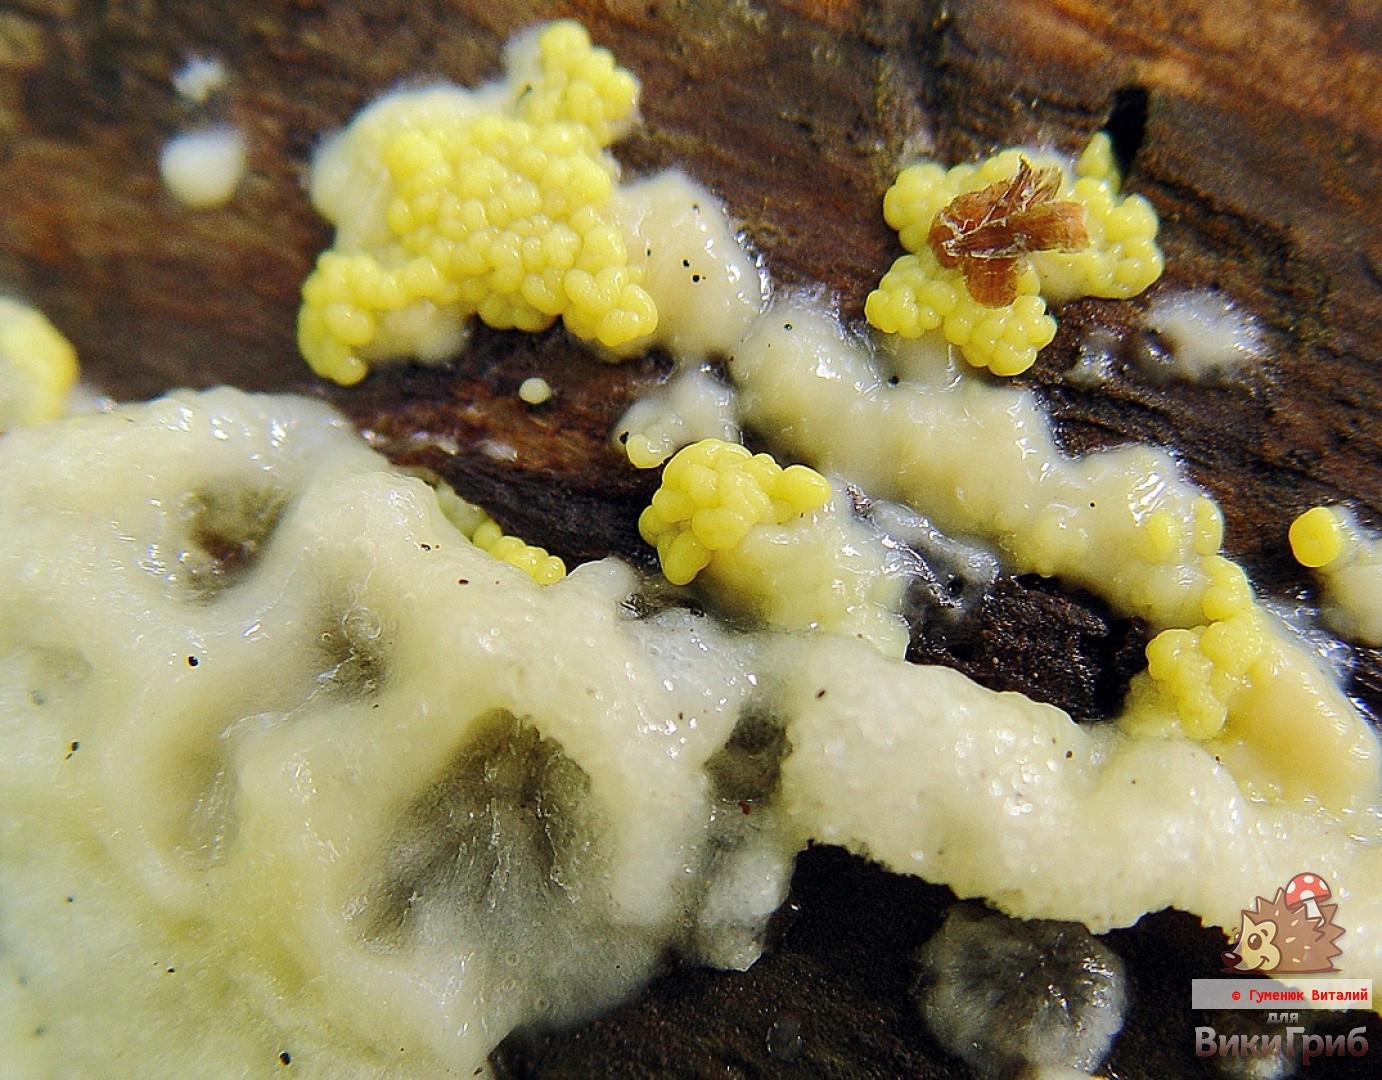 Ceratiomyxa fruticulosa photo and description